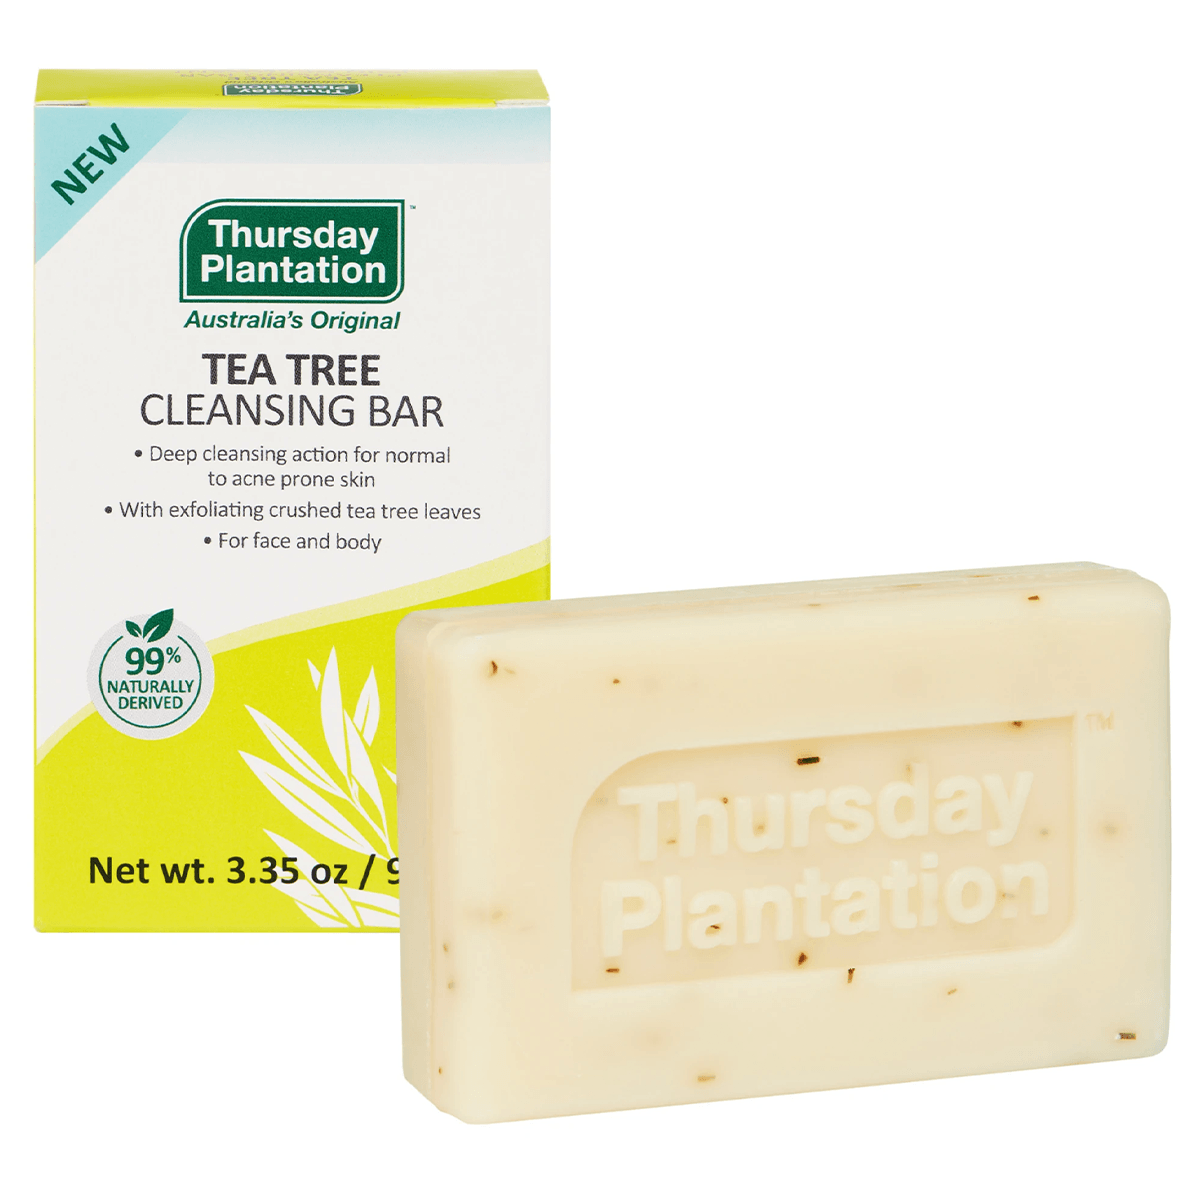 Thursday Plantation Cleansing Bar Tea Tree 95g* Soap & Gel at Village Vitamin Store